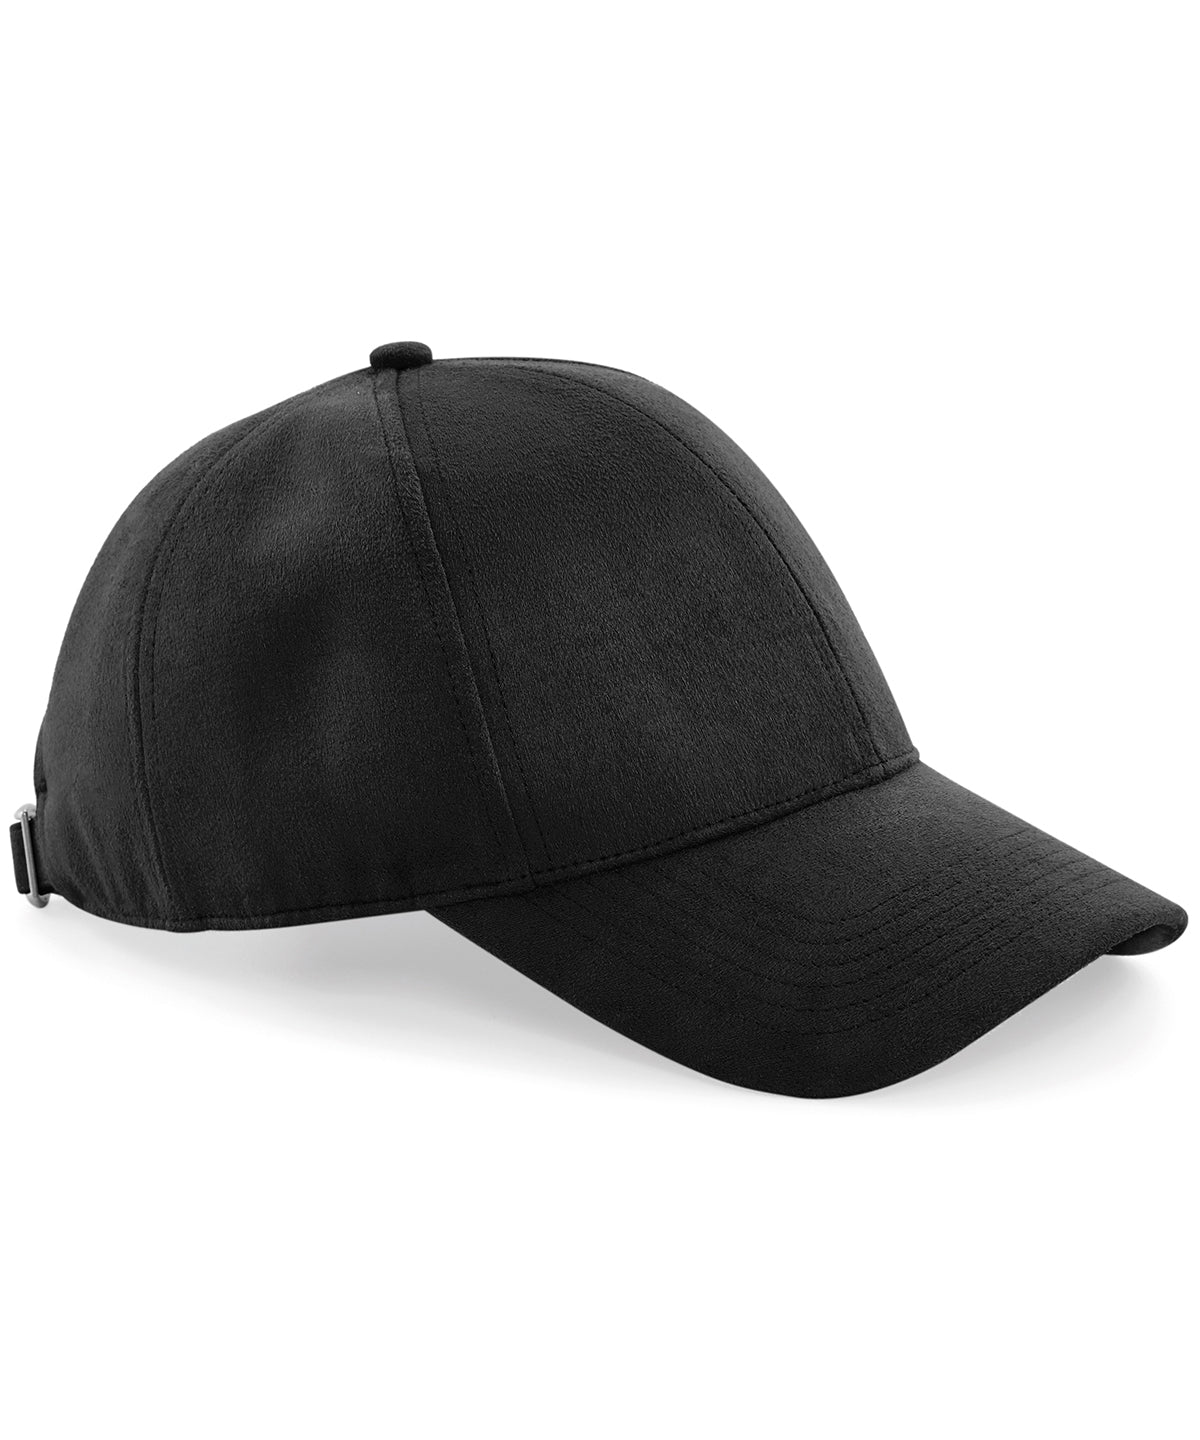 Personalised Caps - Black Beechfield Faux suede 6-panel cap